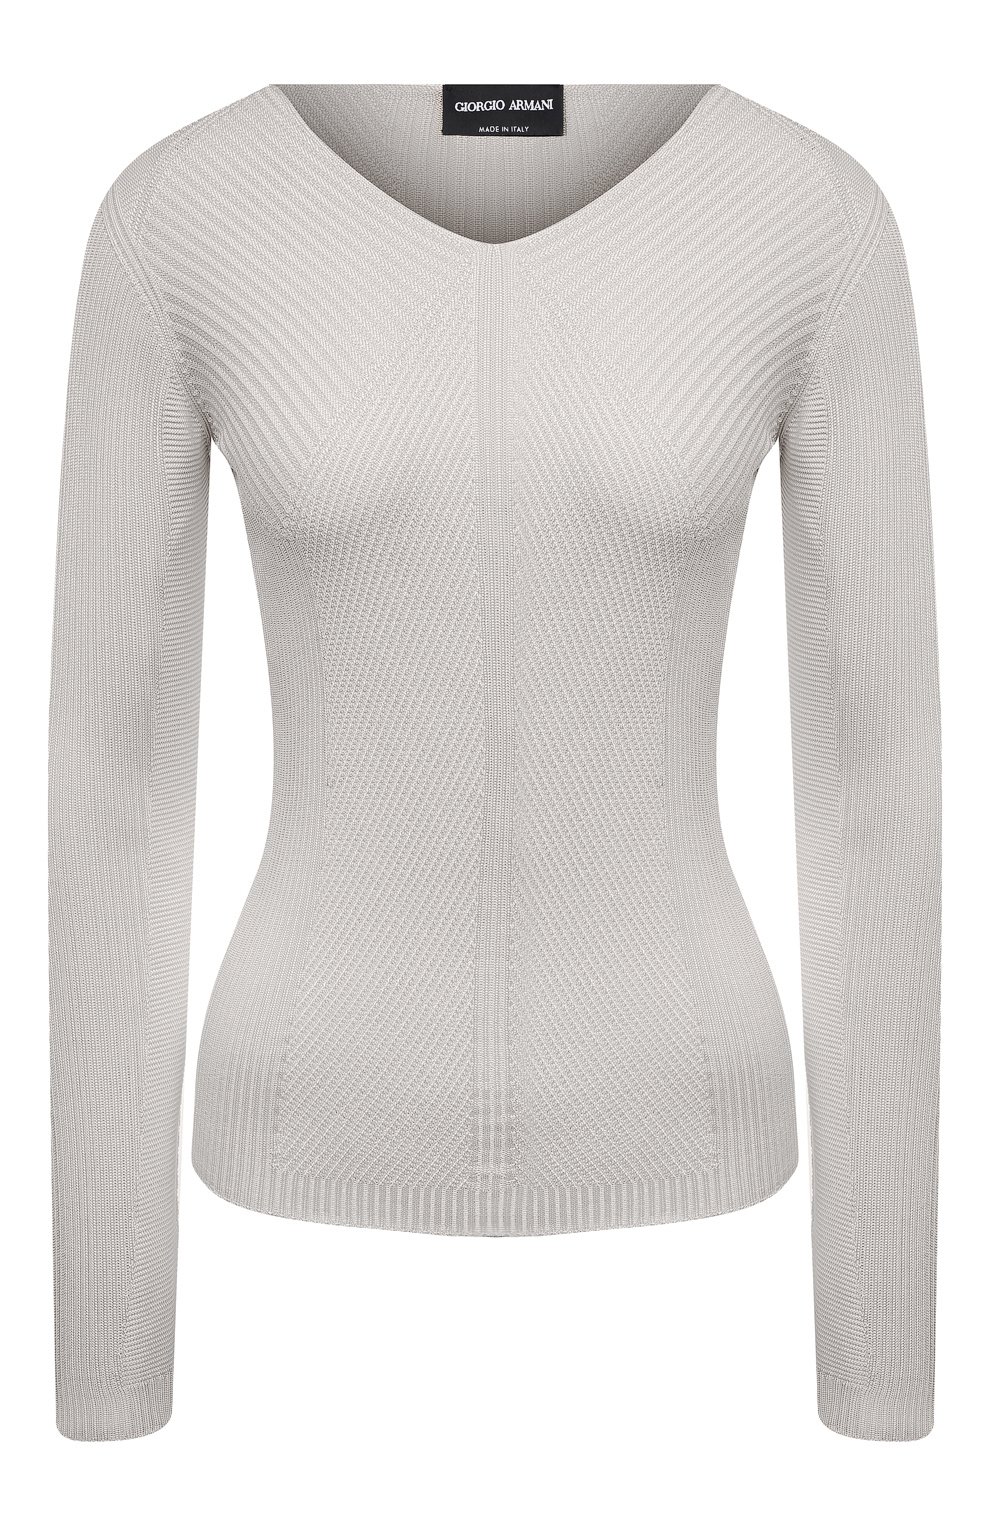 Шелковый пуловер Giorgio Armani Серый 3KAM14/AM37Z 5546220